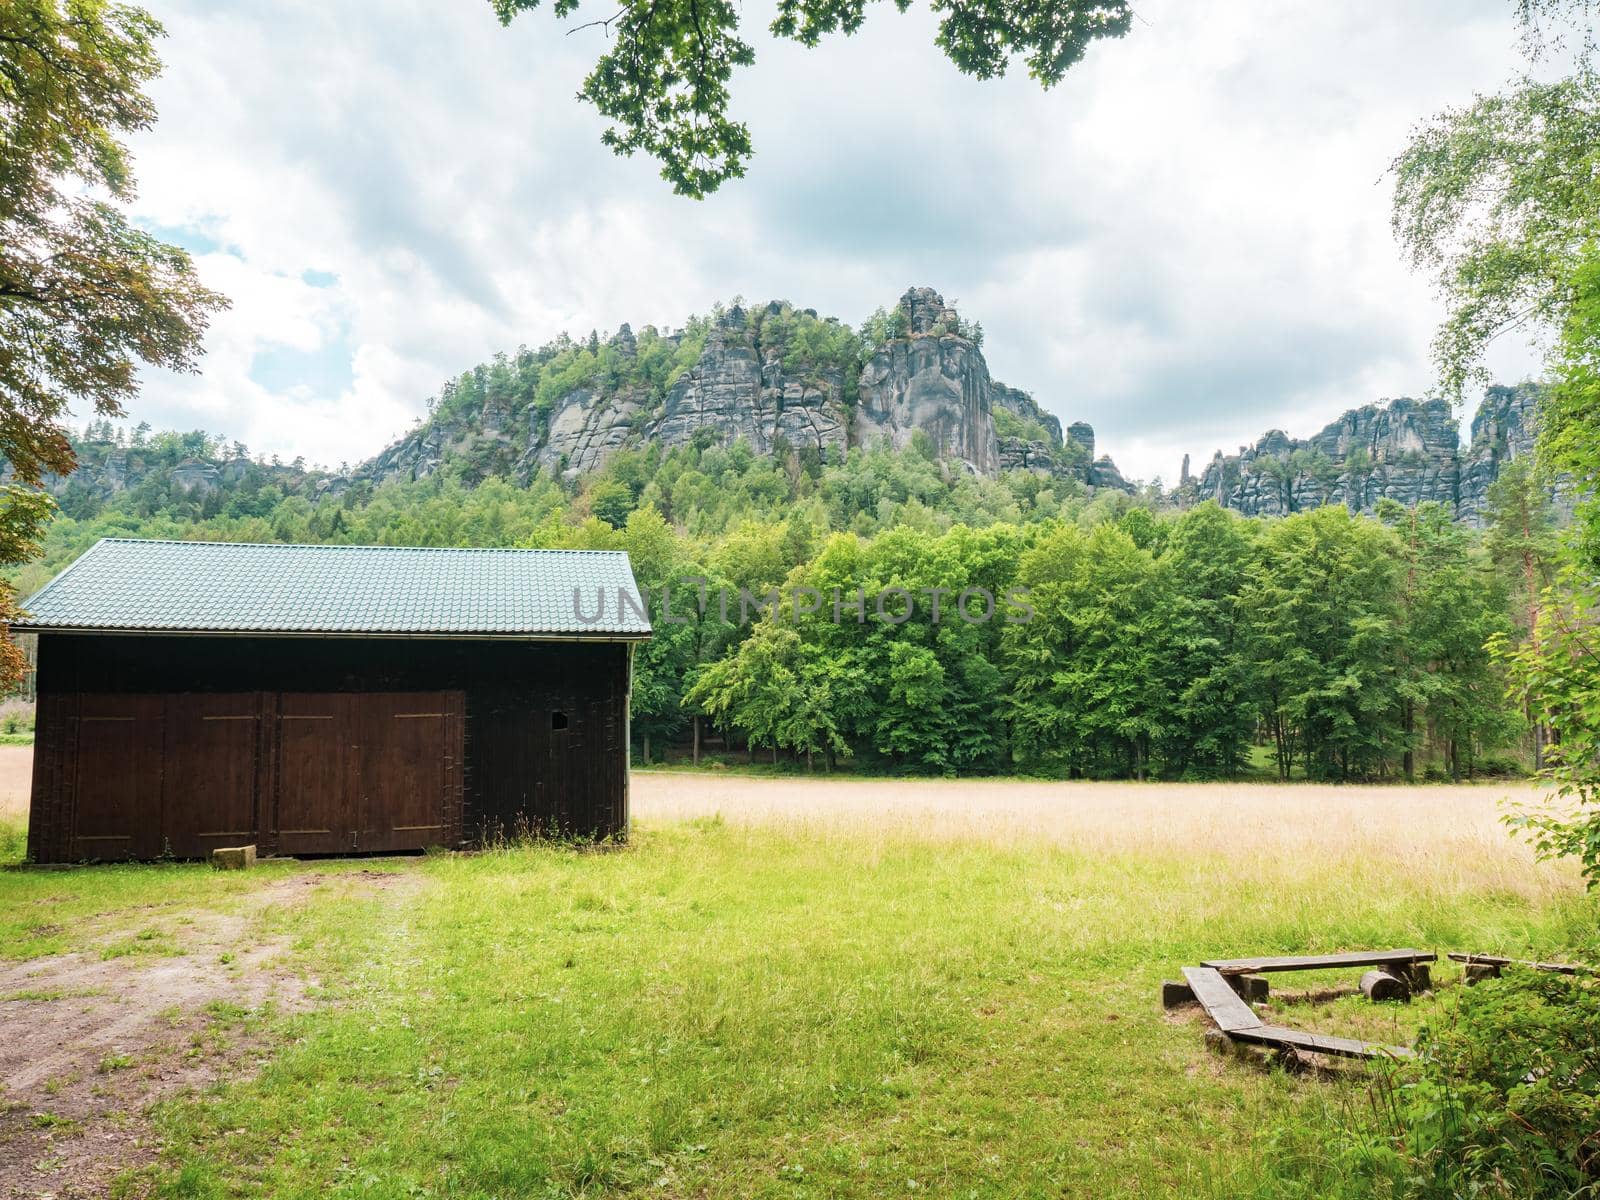 Shelter at meadow close to Schrammsteine and landscape in Saxon Switzerland  by rdonar2